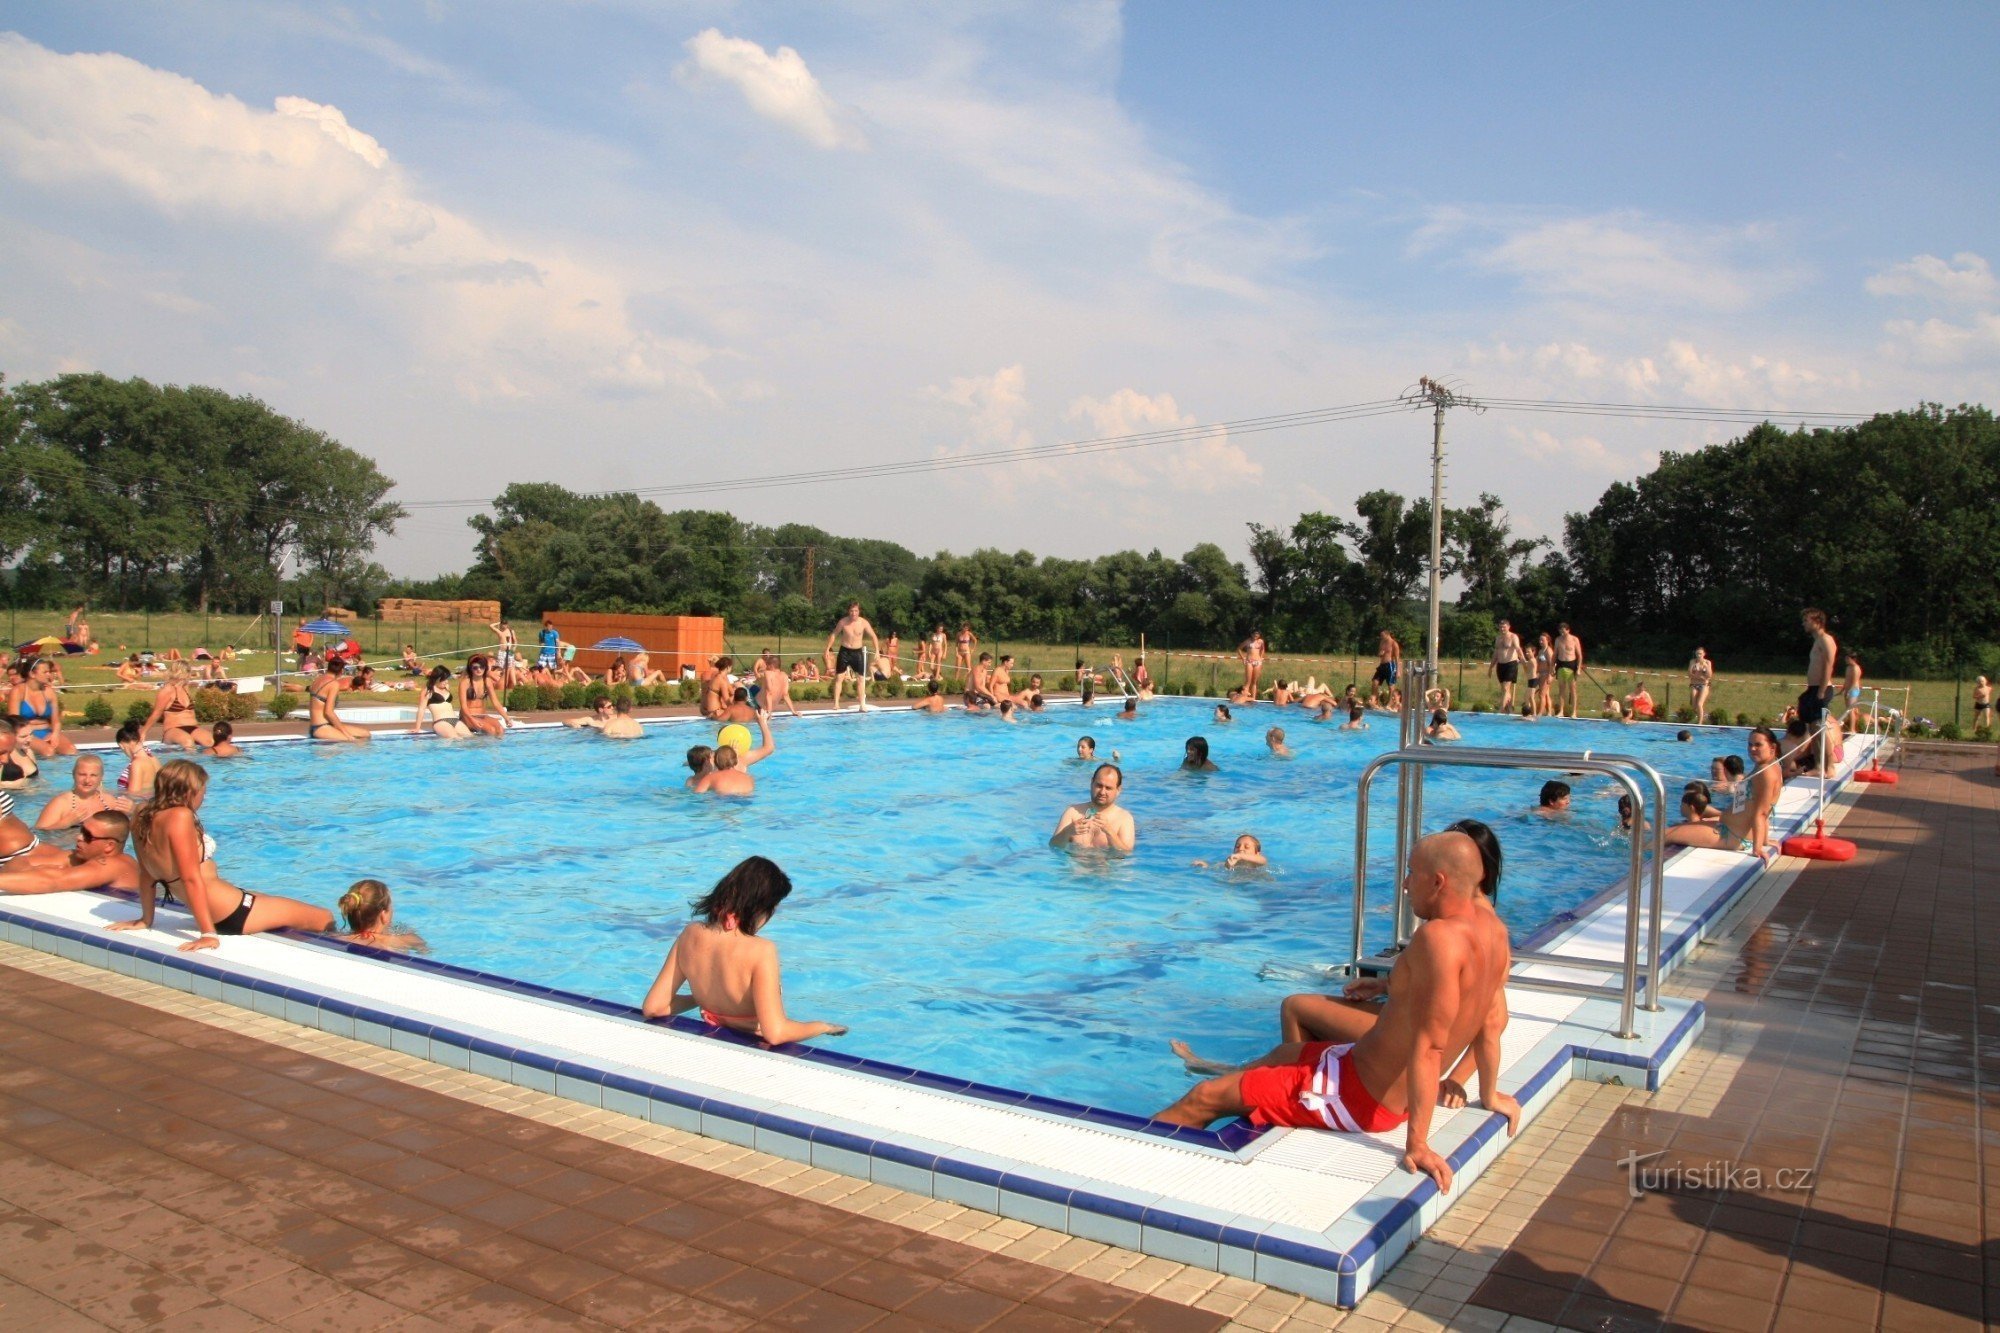 Zabčice - water park